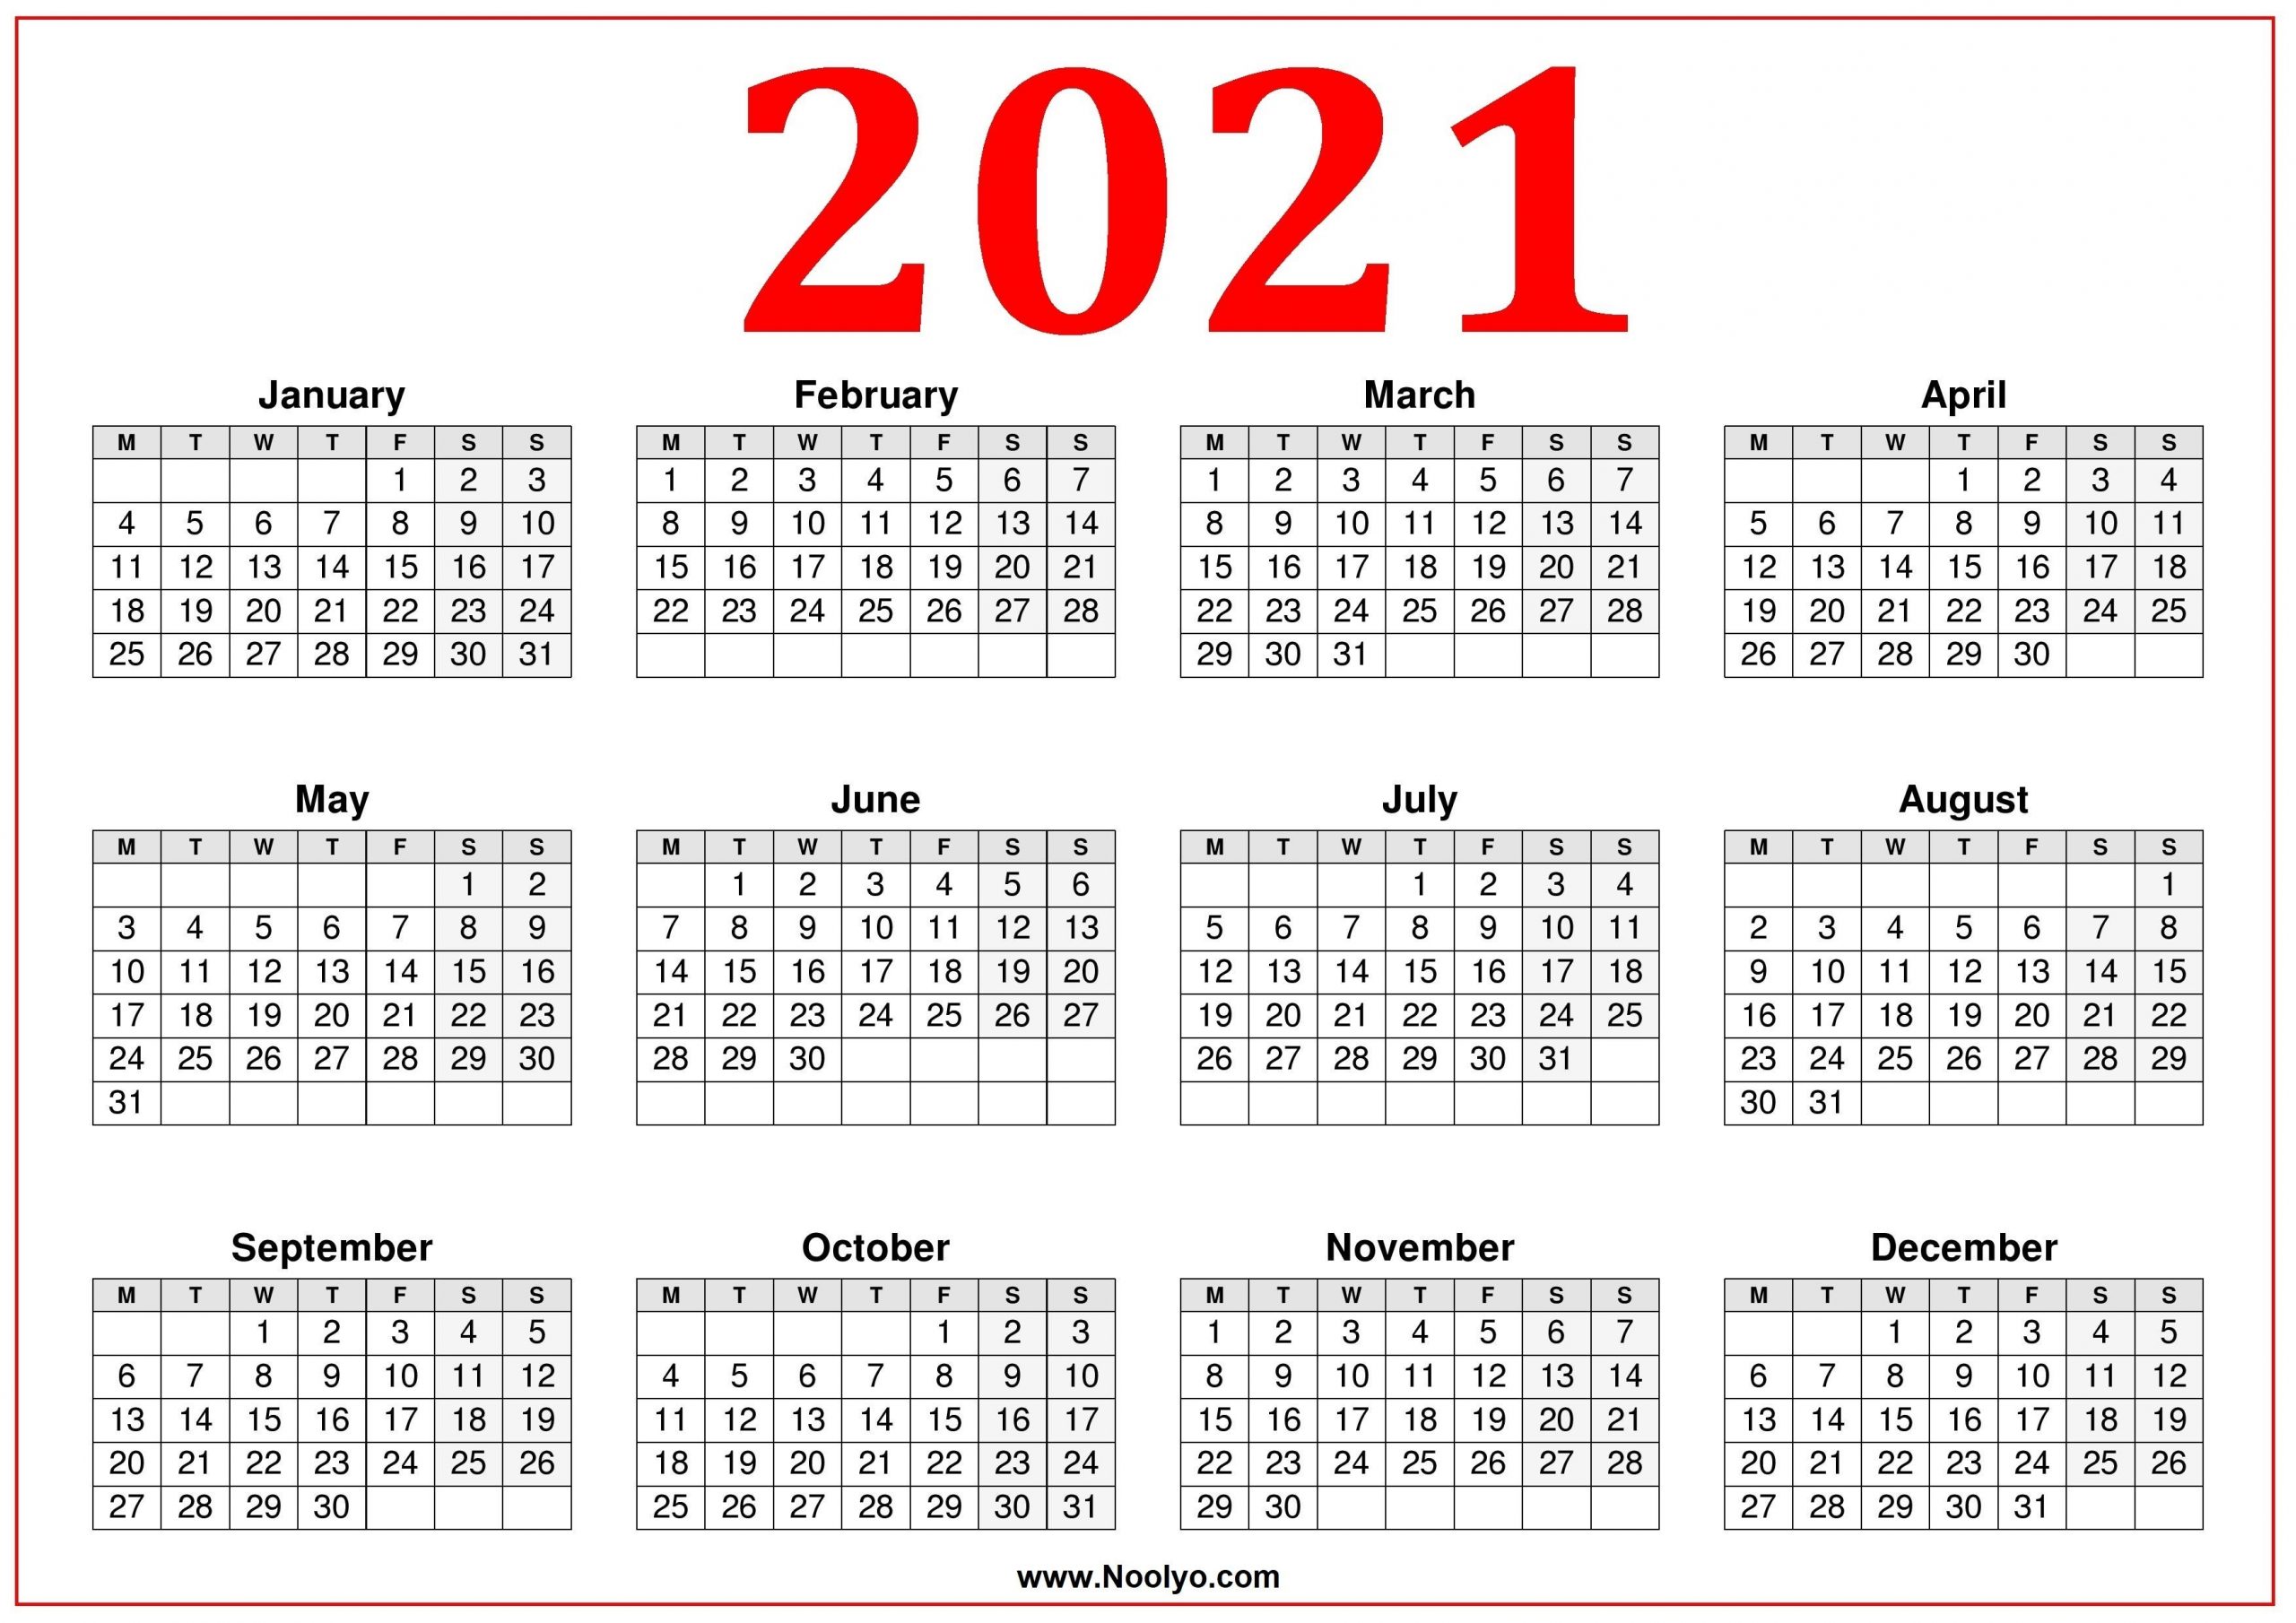 2021 Calendar Wallpapers - Top Free 2021 Calendar